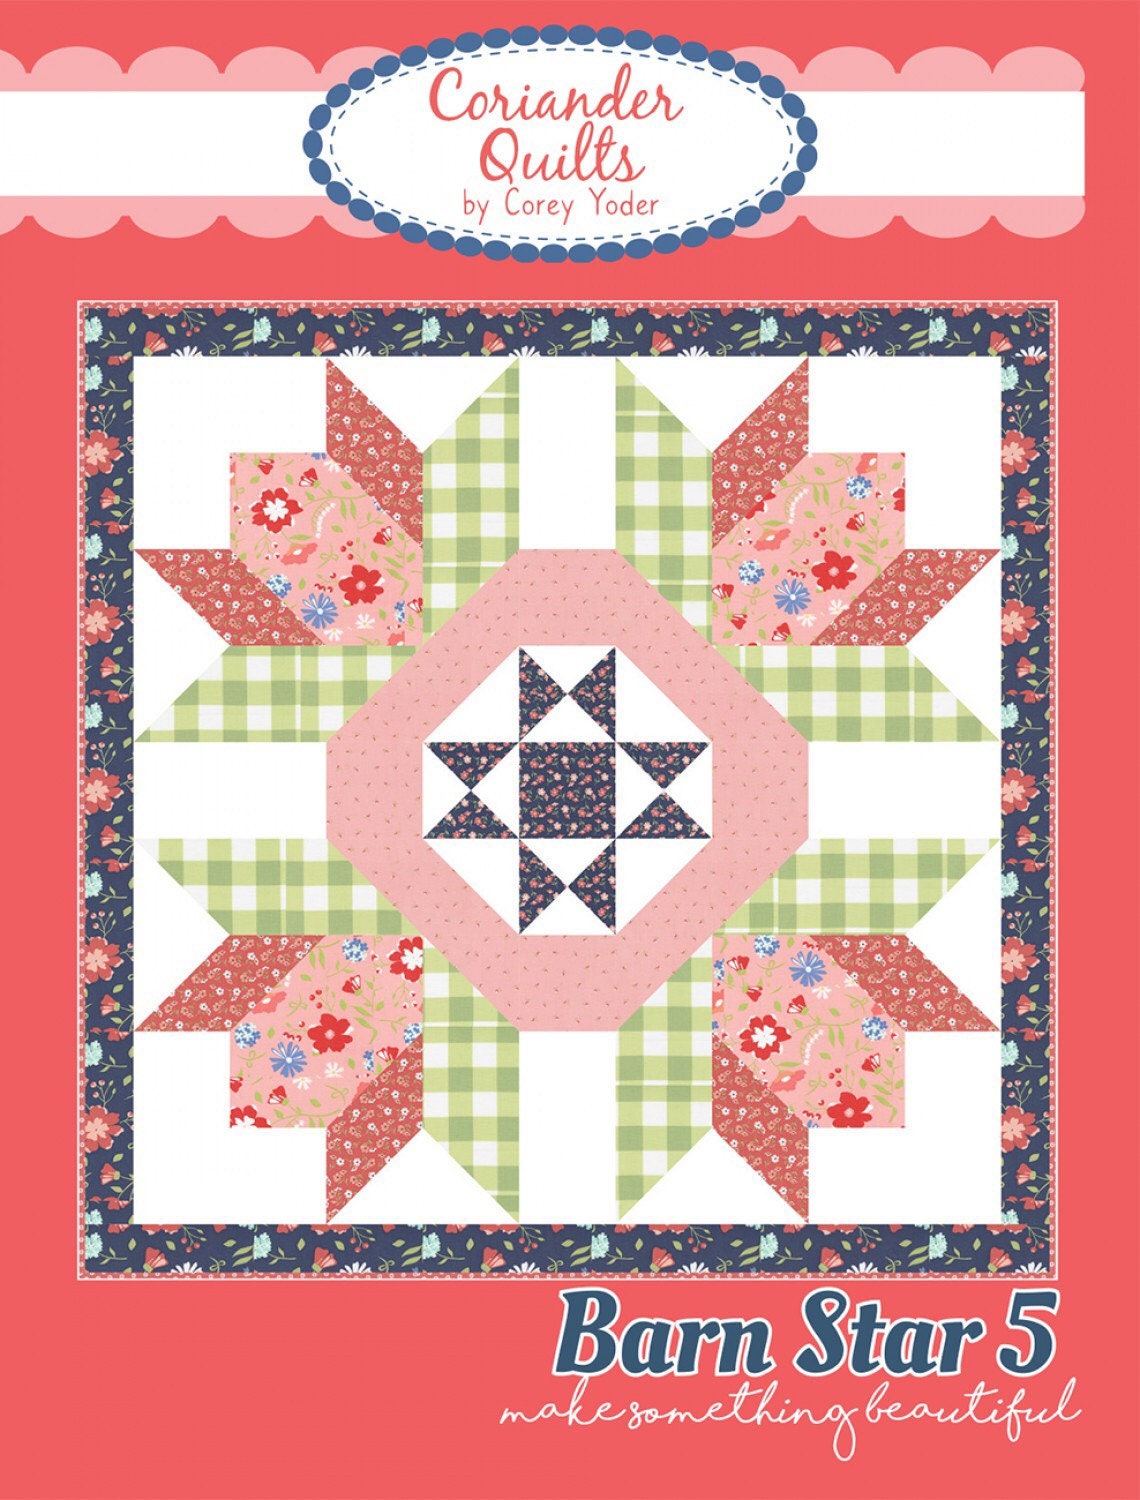 Barn Star 5 Quilt Pattern - Coriander Quilts - Corey Yoder